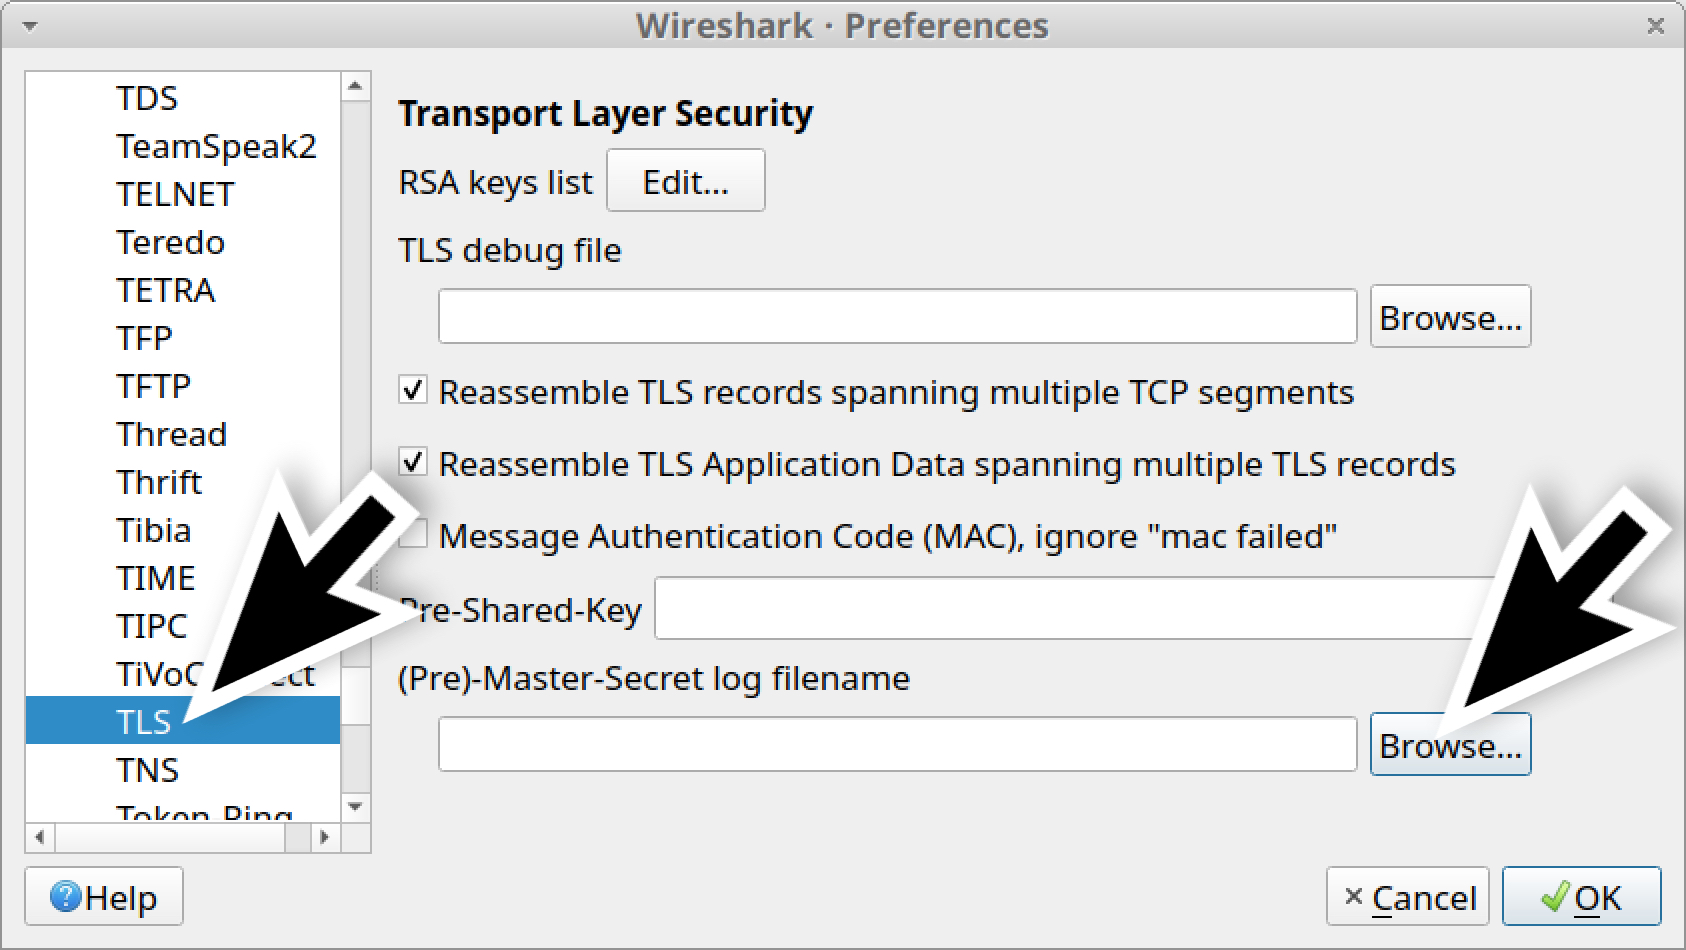 Wireshark 3.x で TLS を選択すると、(Pre)-Master-Secret log filename の行が表示される 